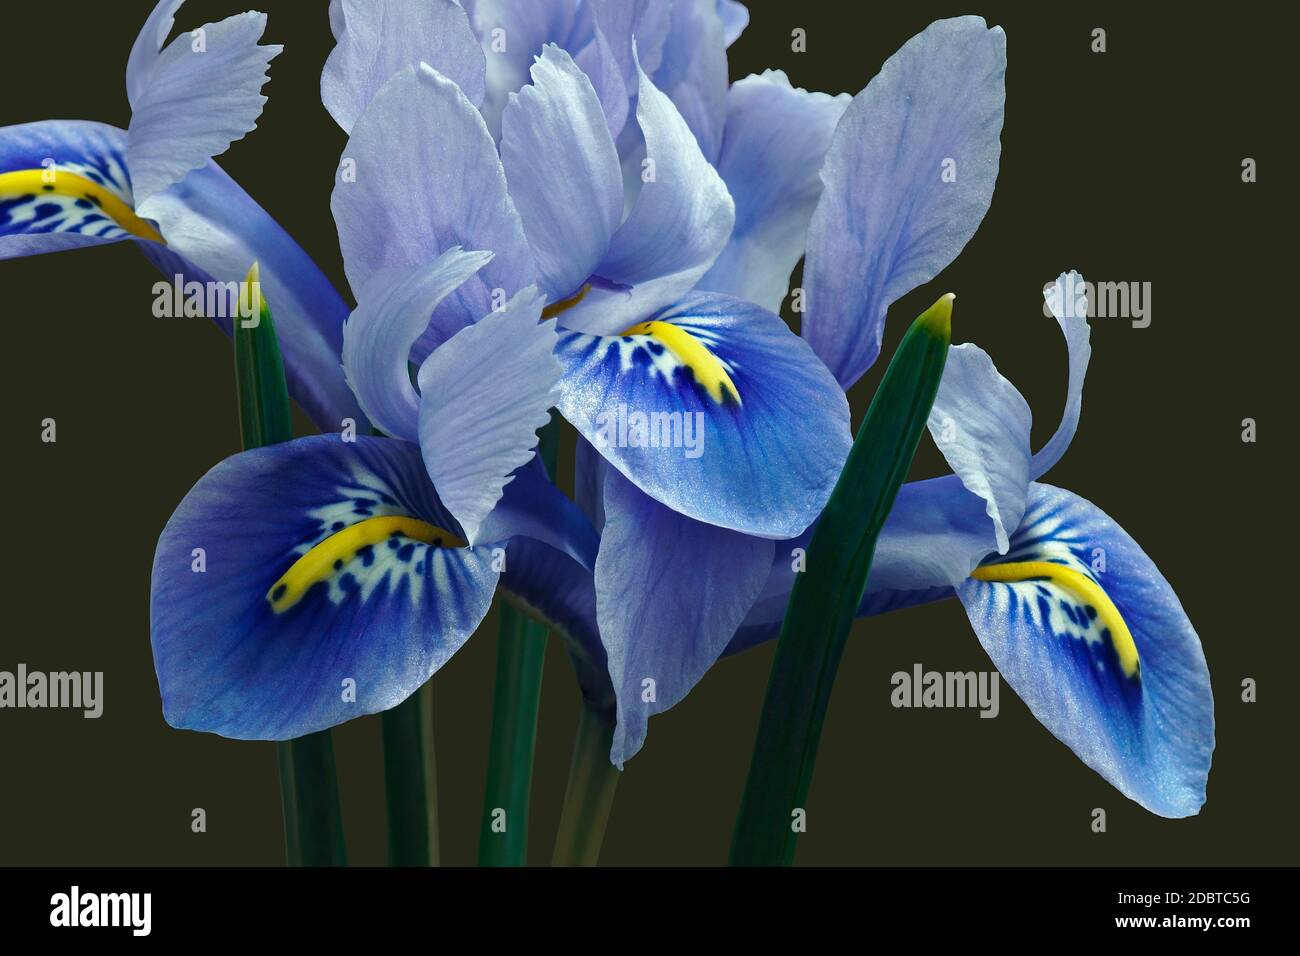 Harmony Dwarf Iris (Iris reticulata ‘Harmony’). Hybrid between Iris reticulata and Iris histrioides. Image of flowers isolated on dark background Stock Photo